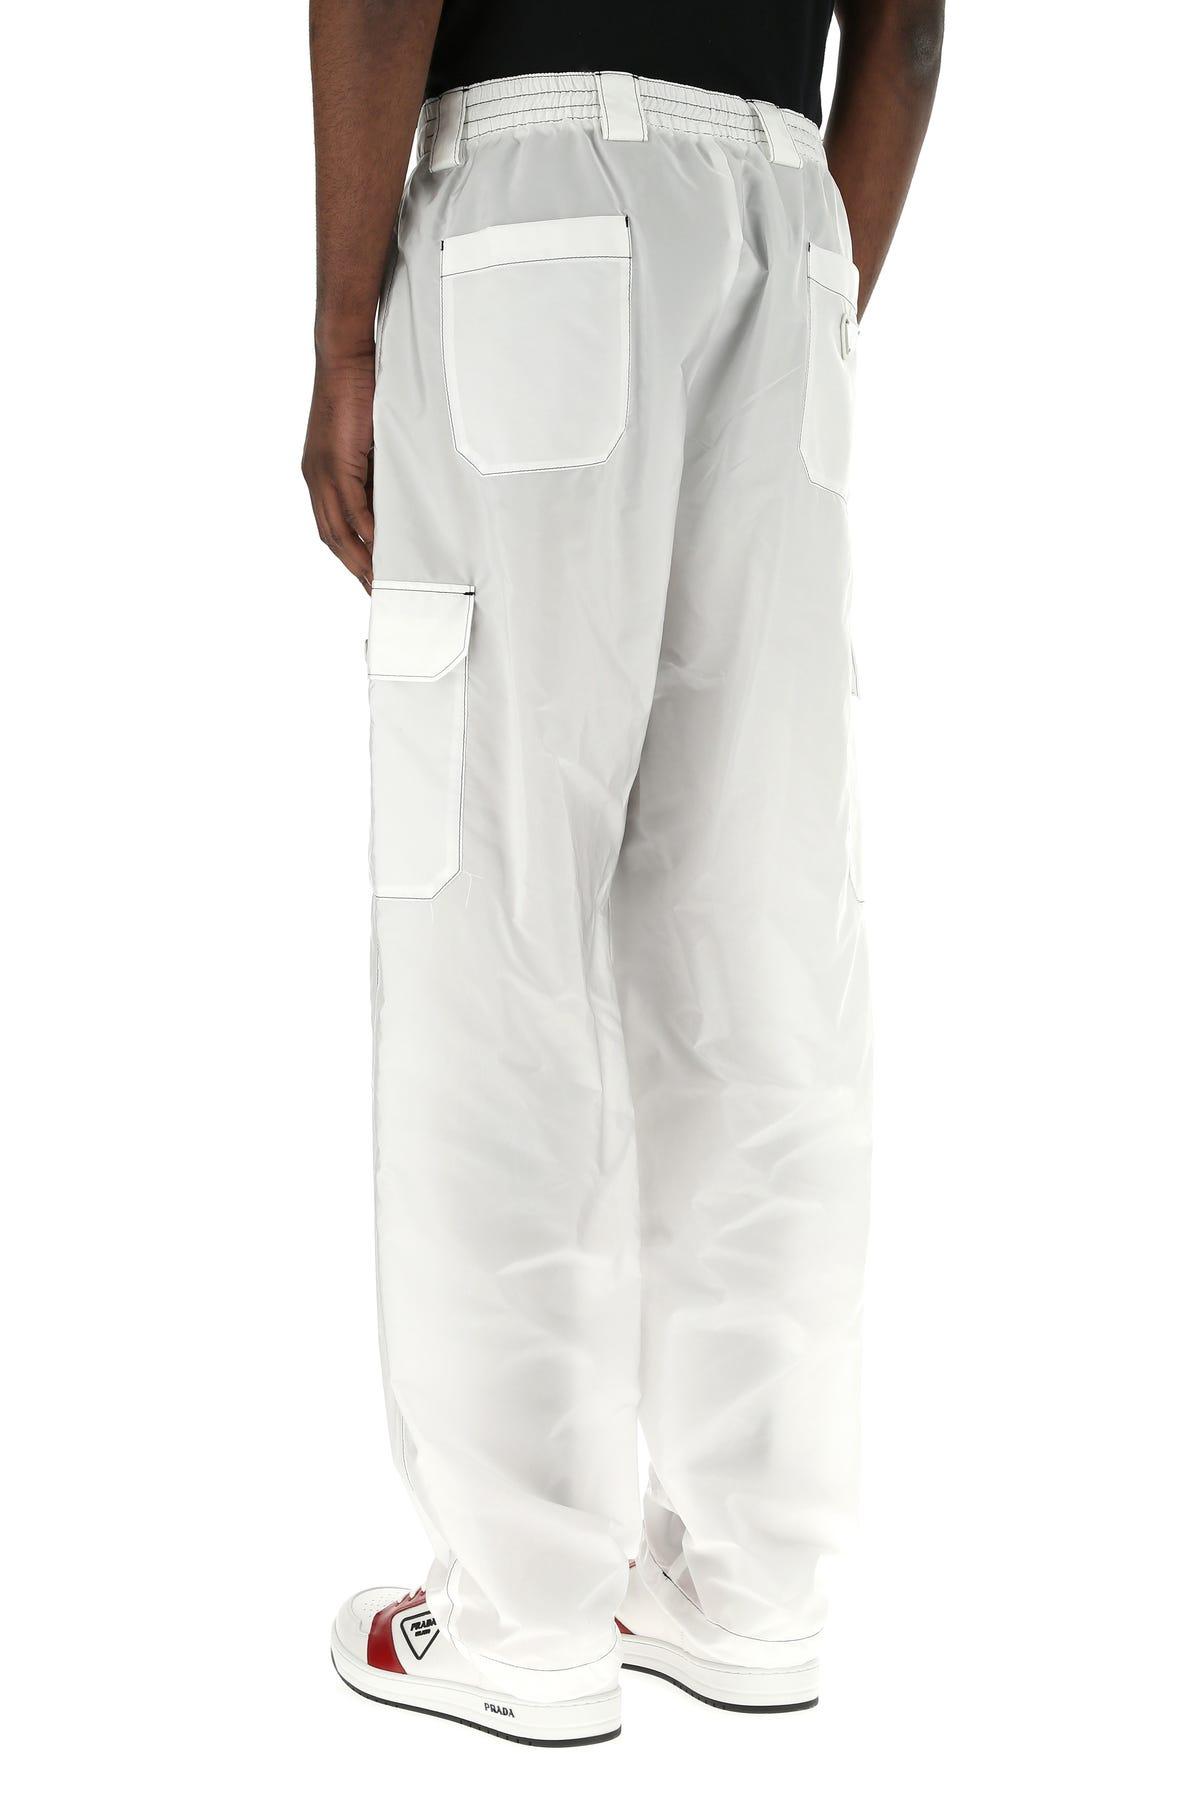 Prada Synthetic White Re-nylon Cargo Pant for Men - Save 36% | Lyst